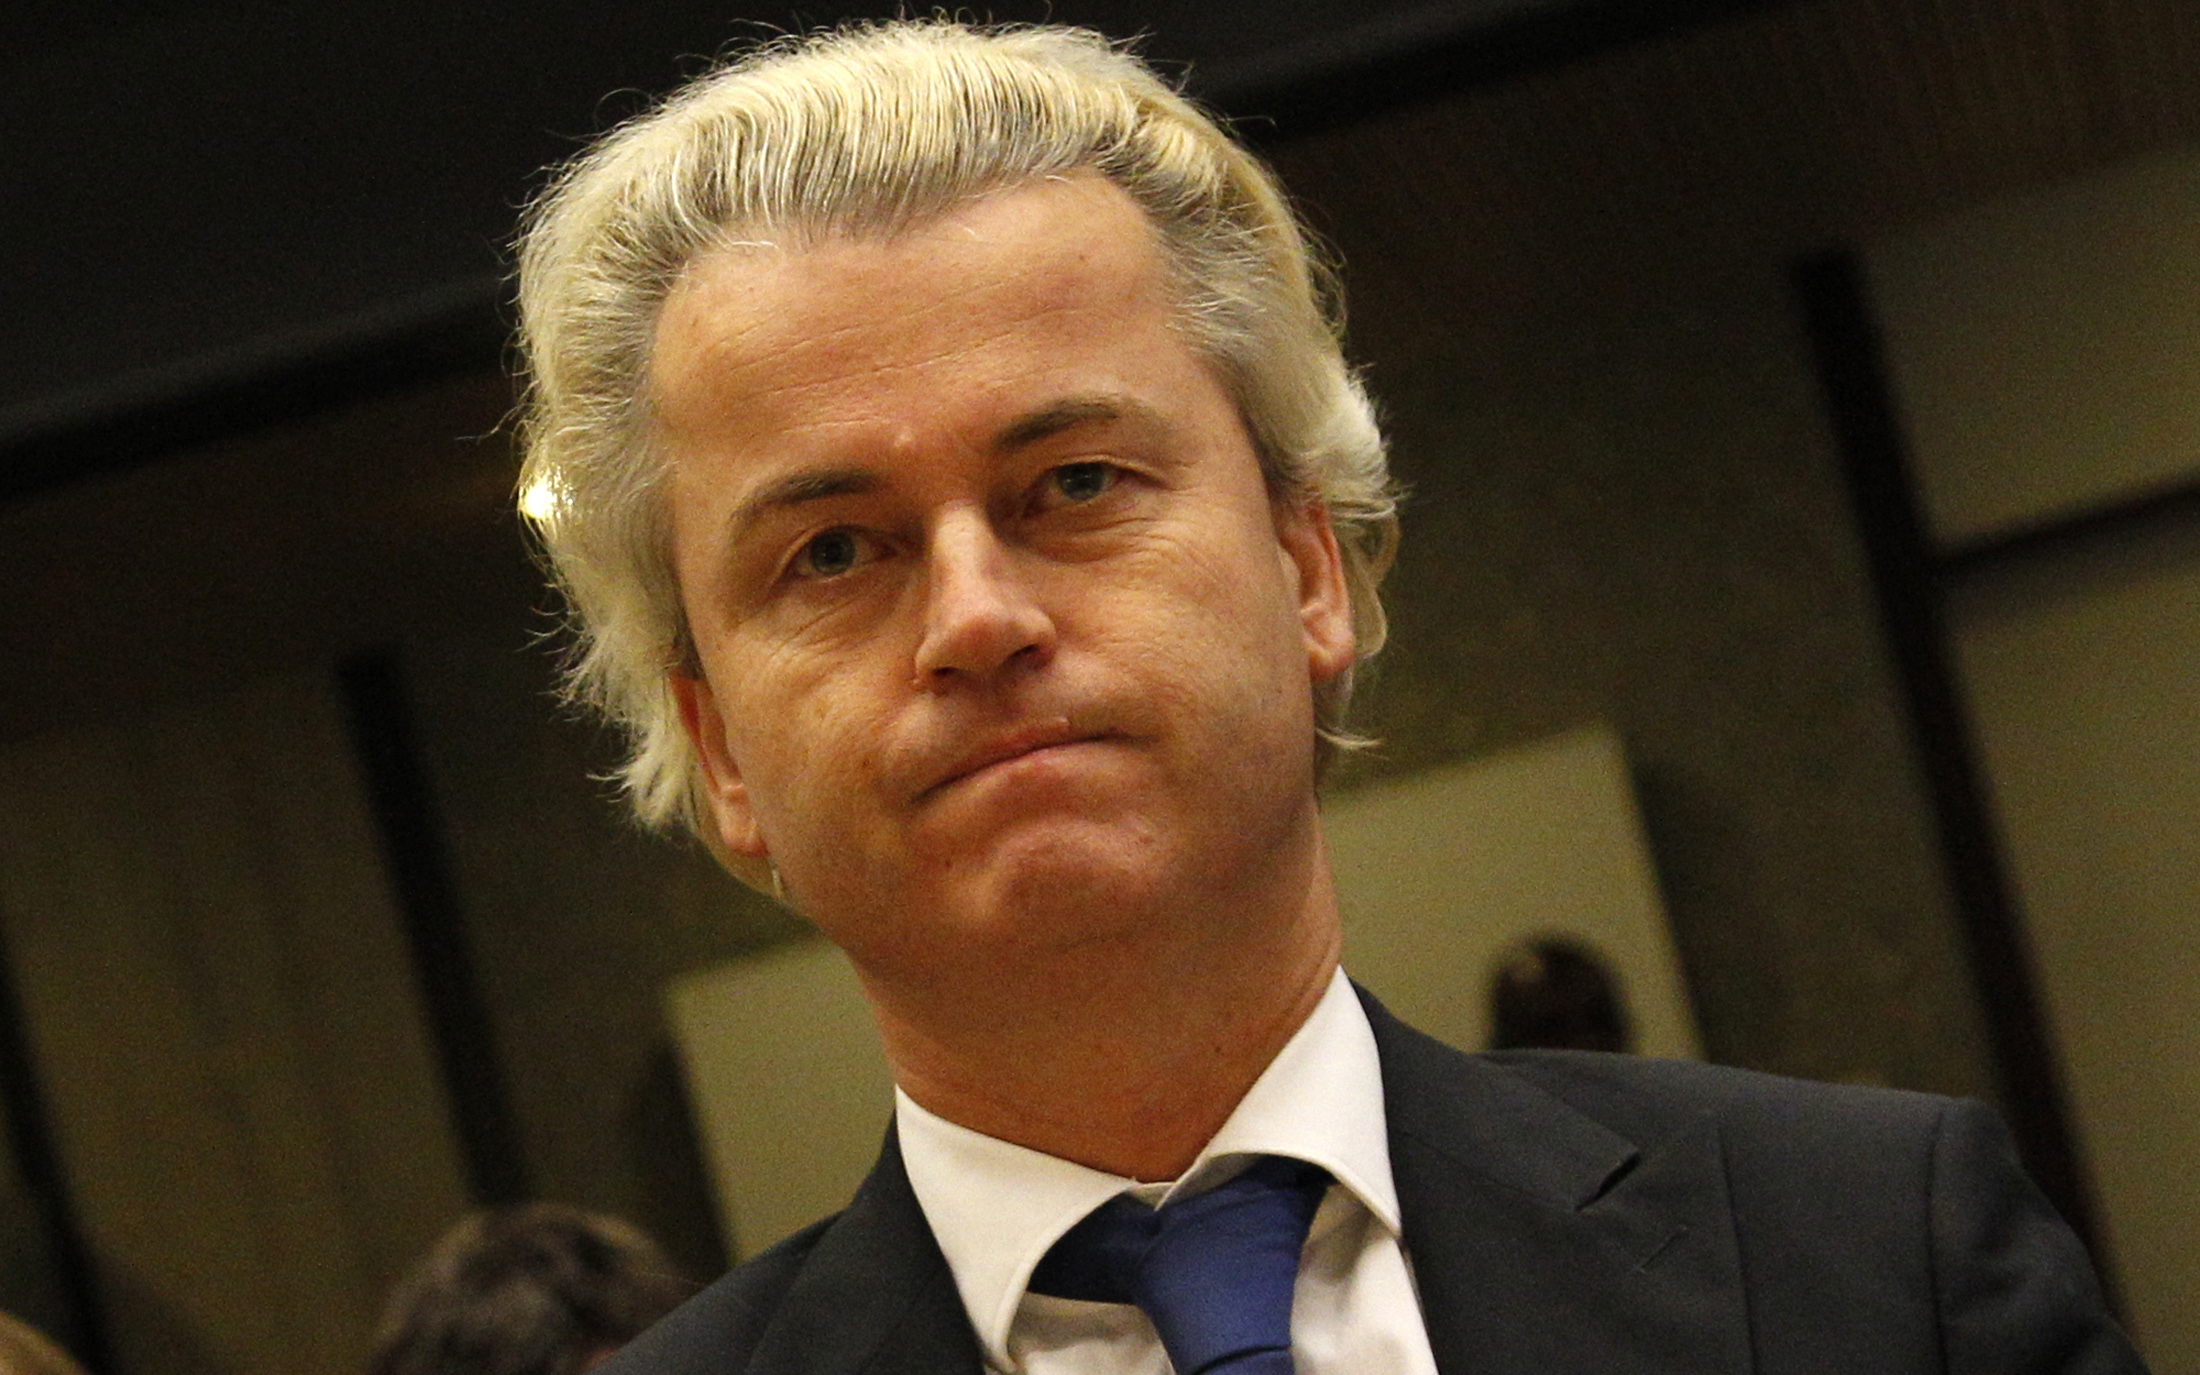 Domstol, Rasism, Islamofobi, Hets mot folkgrupp, Geert Wilders, Främlingsfientlighet